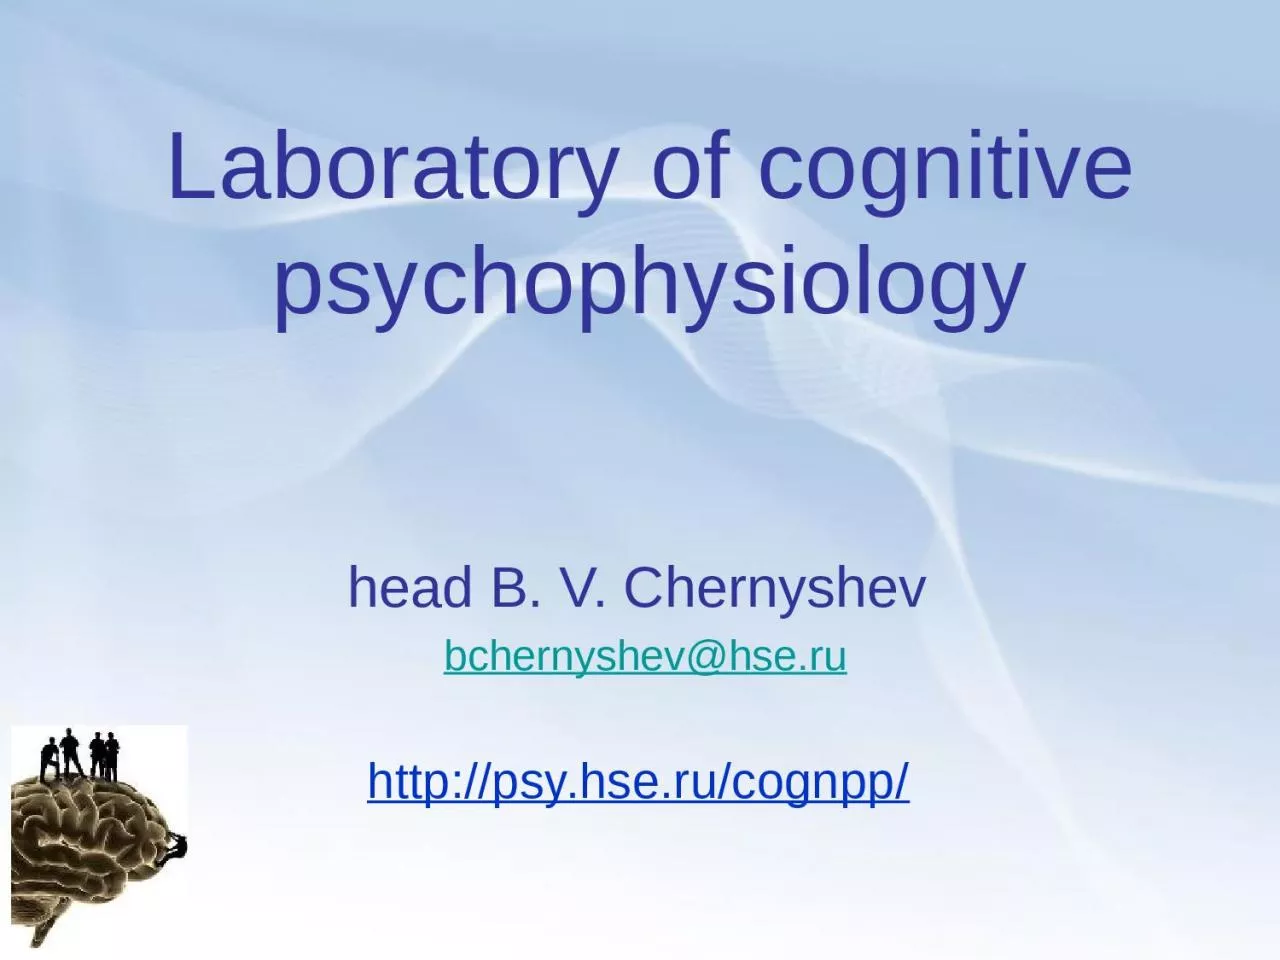 Laboratory of cognitive psychophysiology